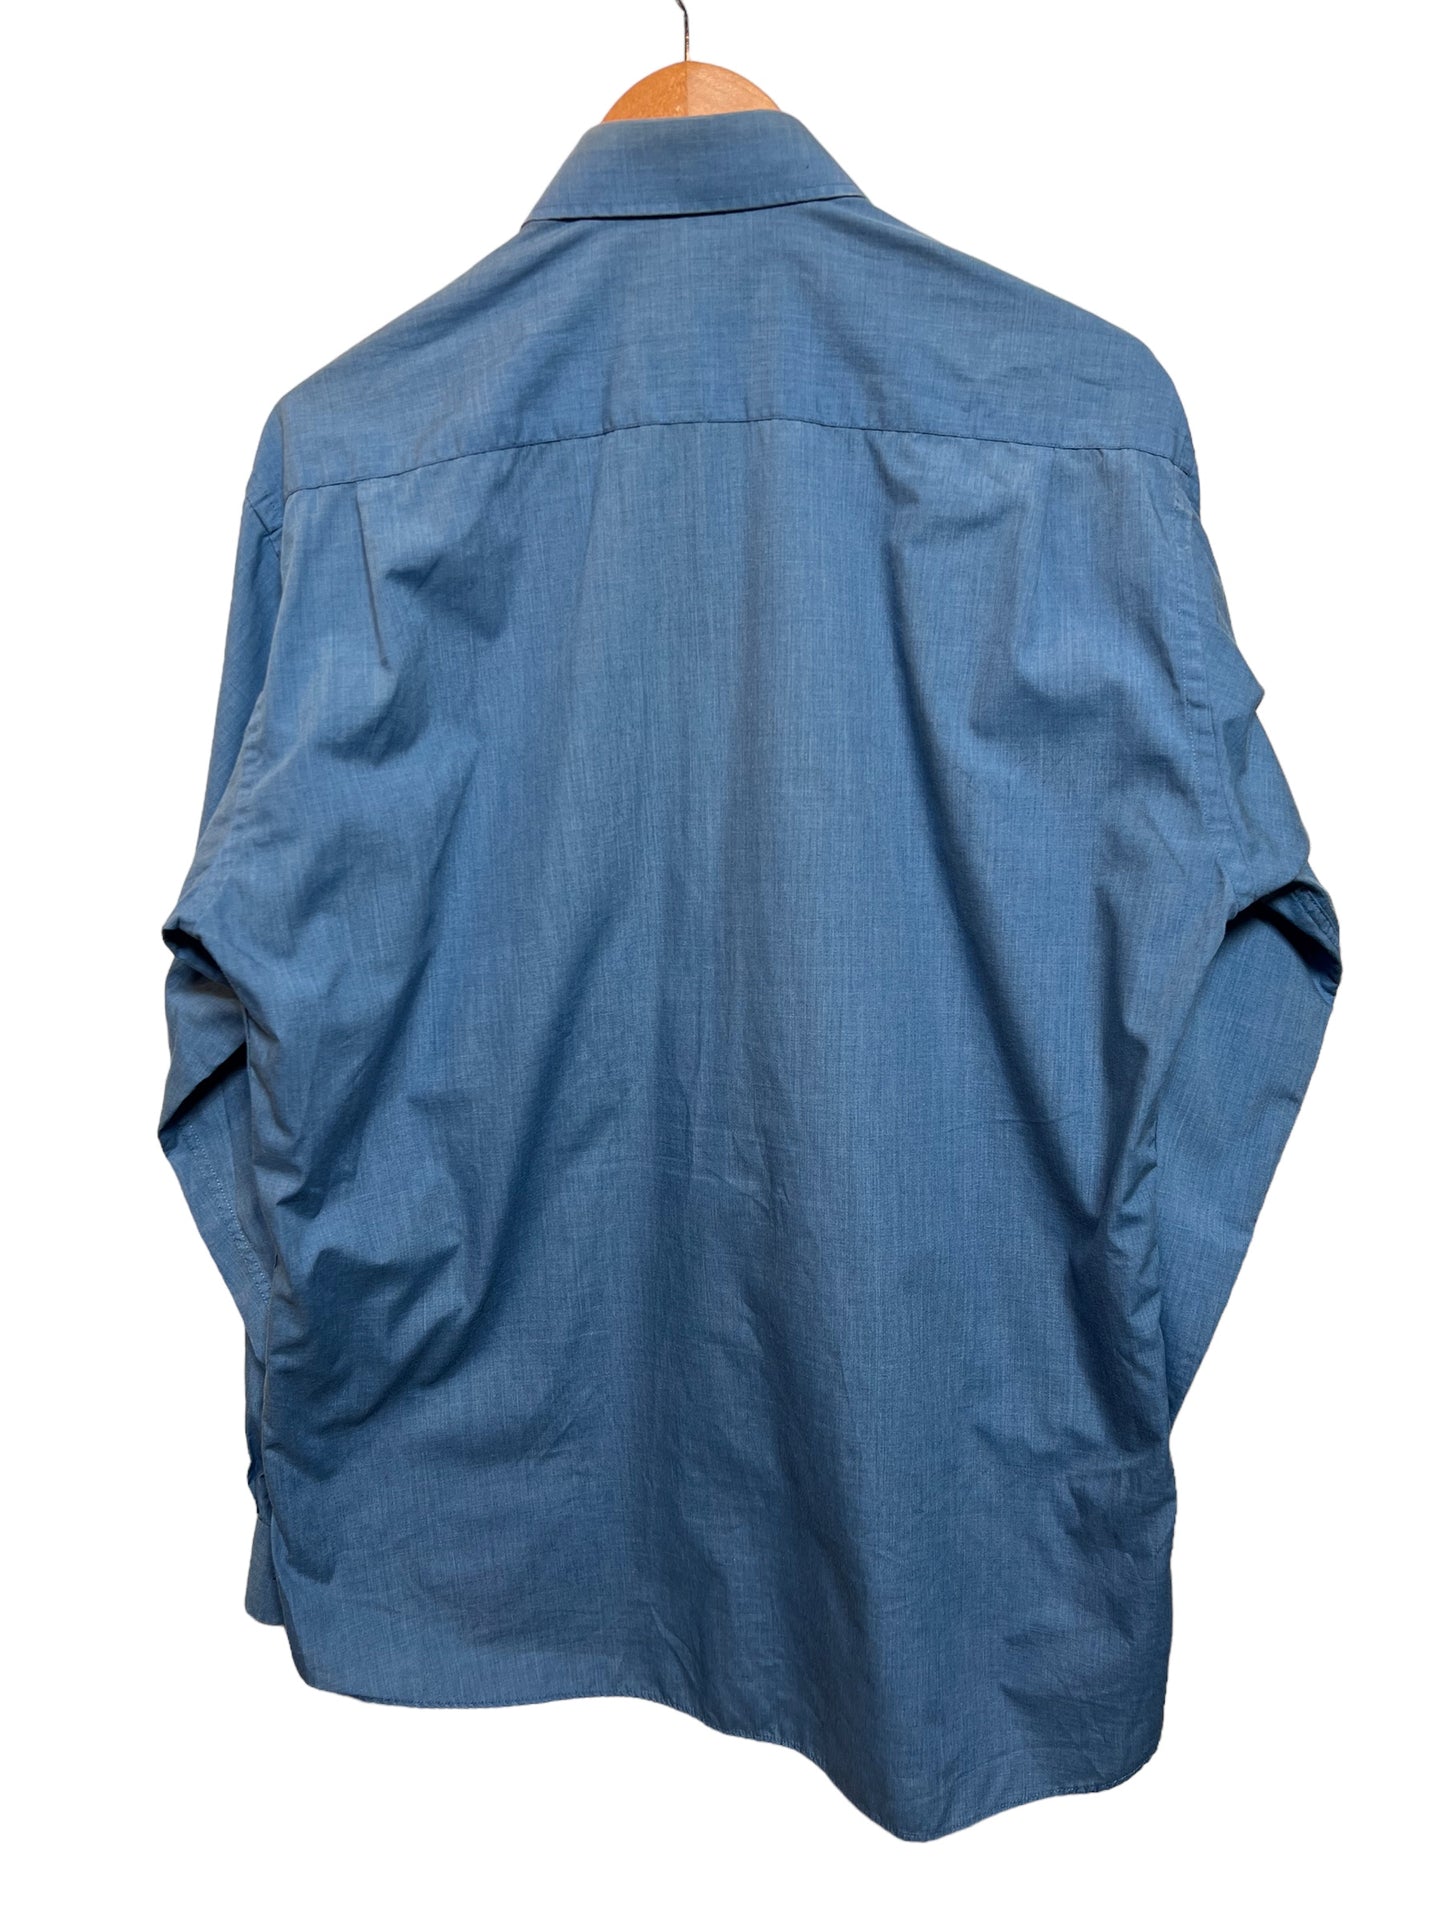 M&S Men’s Longsleeve Formal Shirt (Size XL)